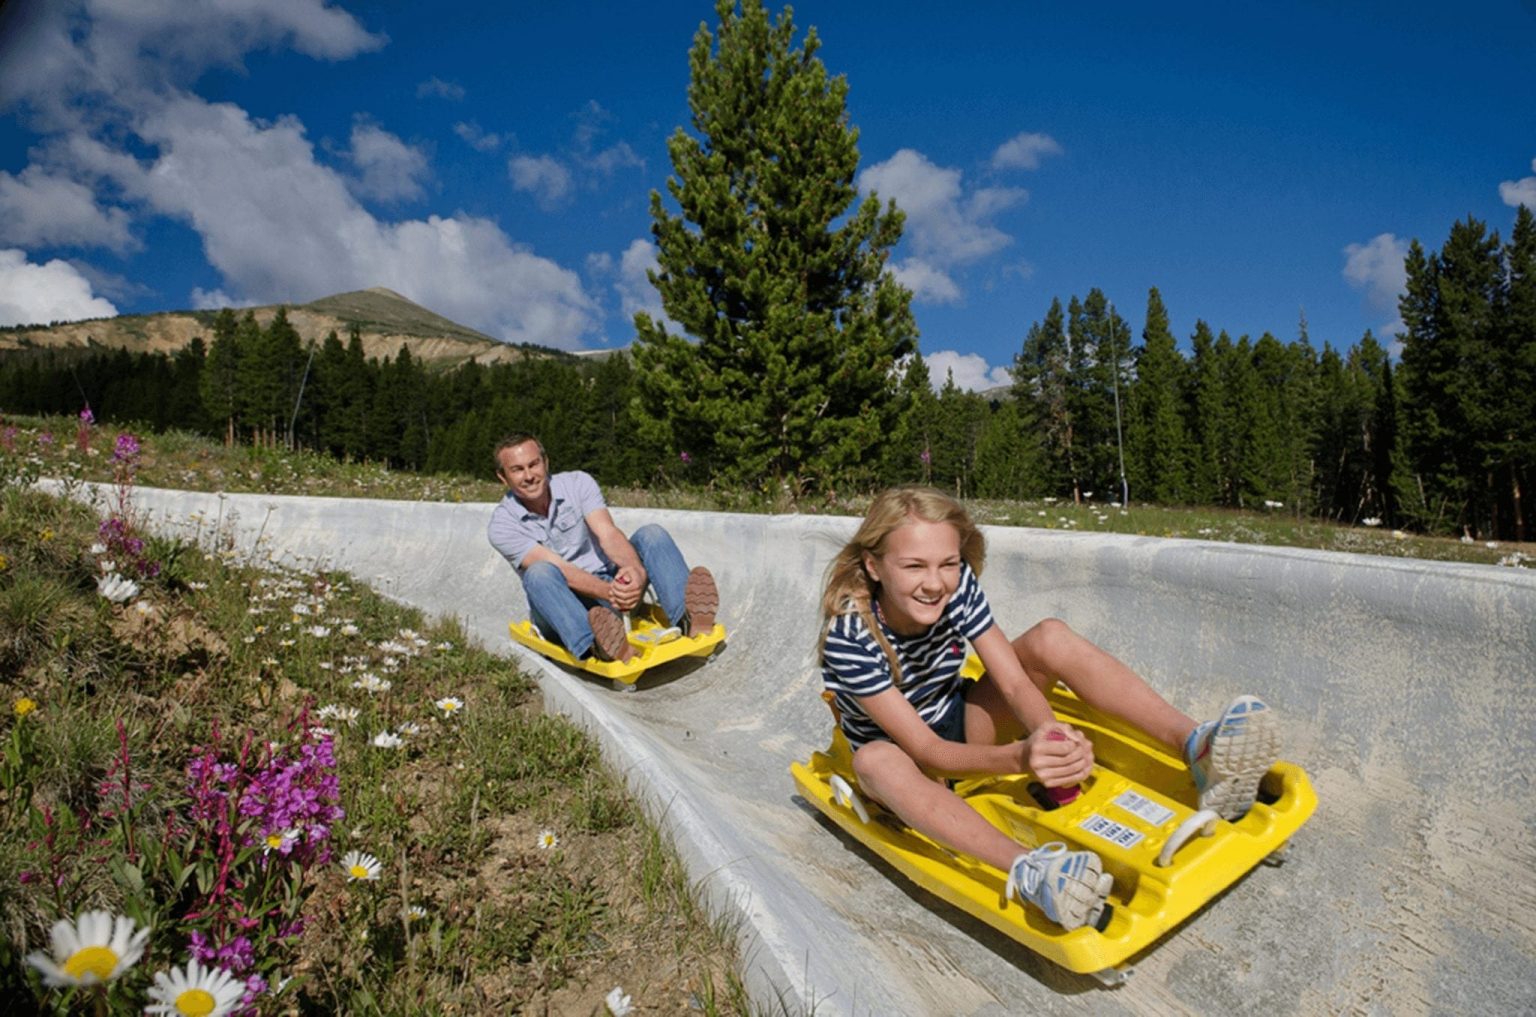 Father and daughter on the Alpine Slide at Breckenridge Ski Resort